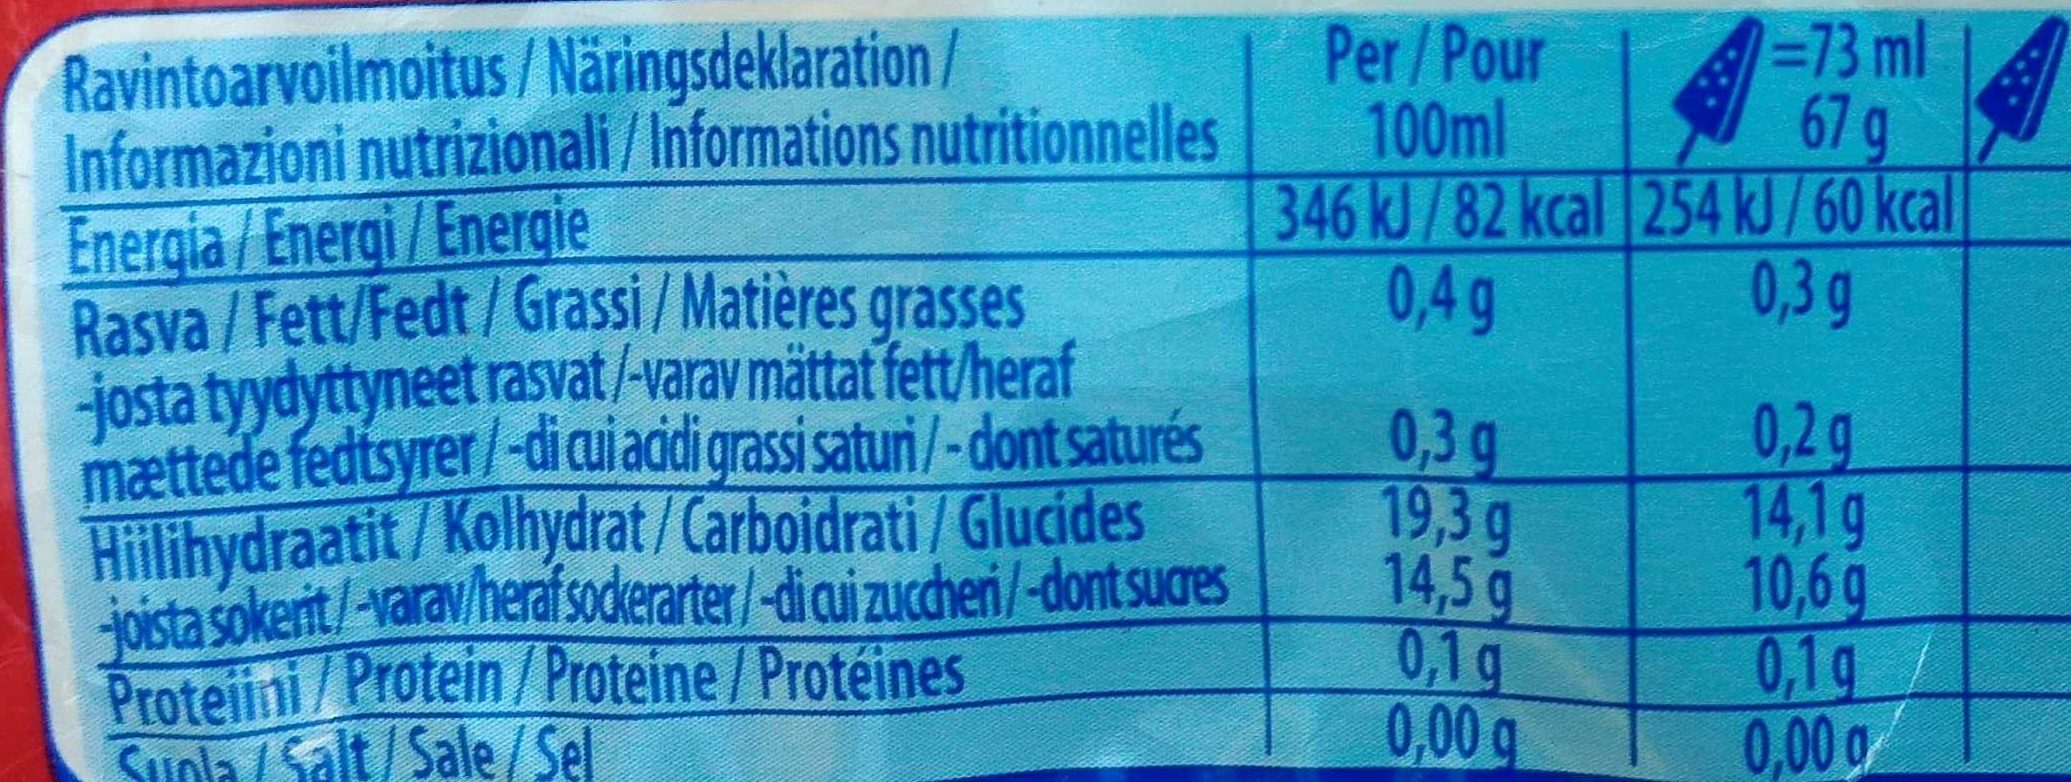 Pirulo Watermelon - Nutrition facts - fr